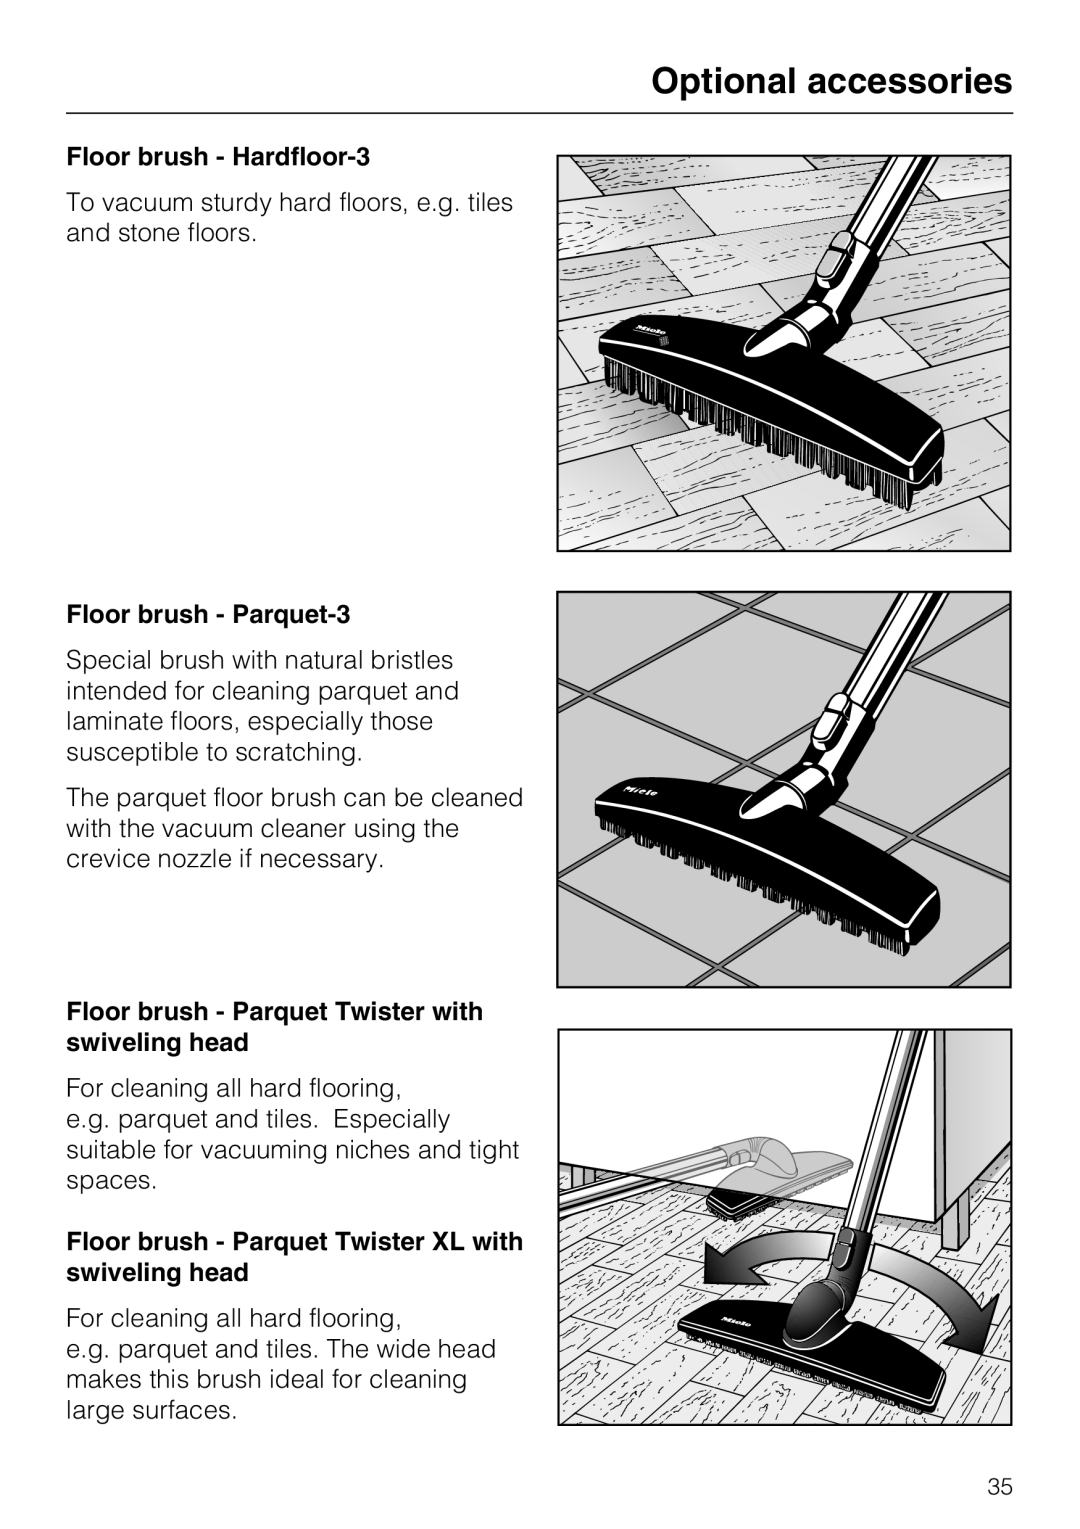 Miele S 5981 manual Optional accessories, Floor brush - Hardfloor-3, Floor brush - Parquet-3 